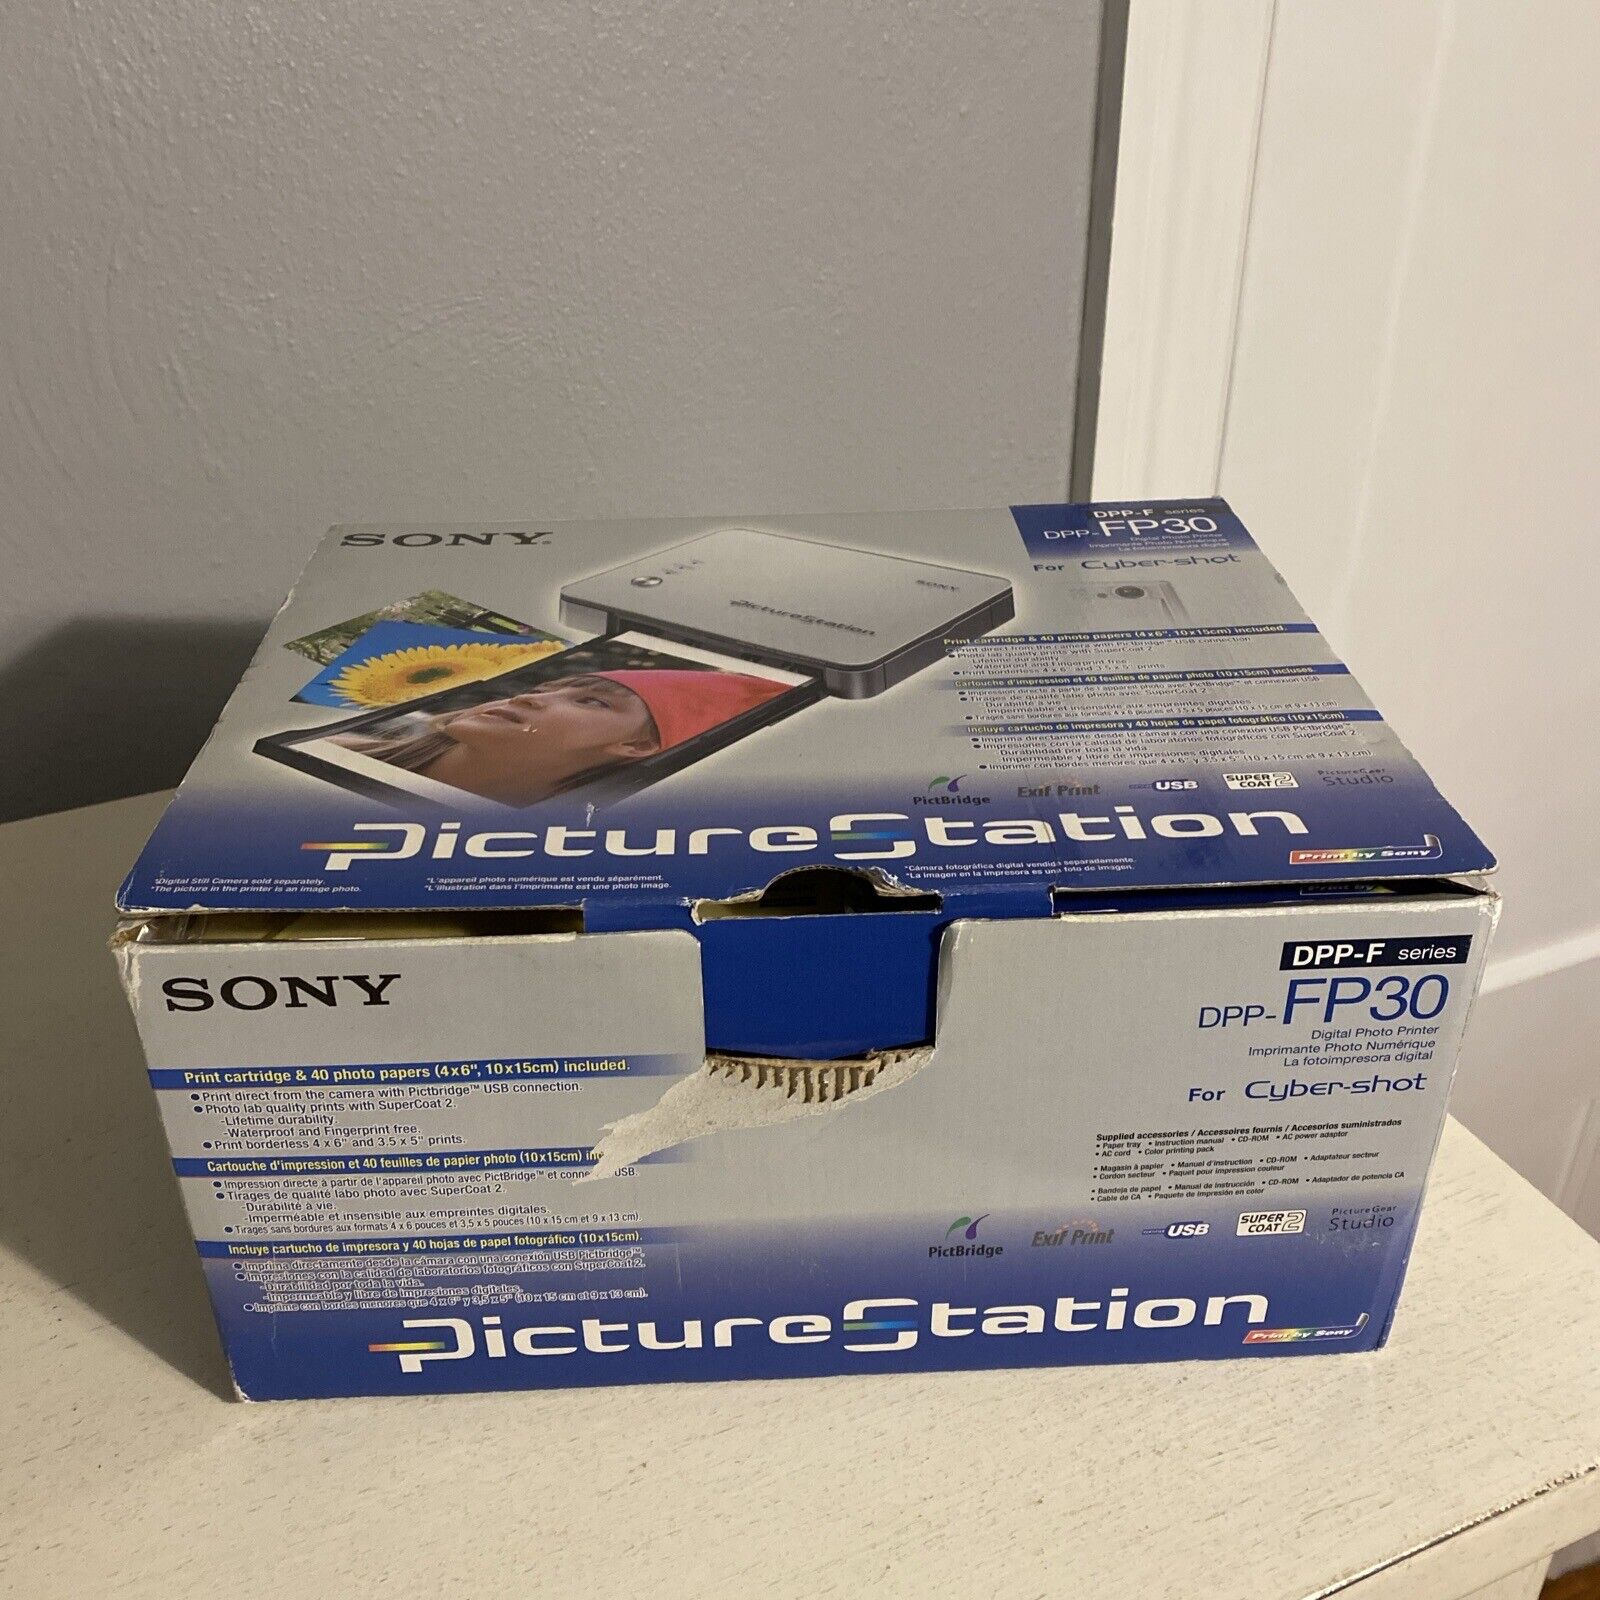 Sony DPP-FP30 Digital Photo Printer - Open Box